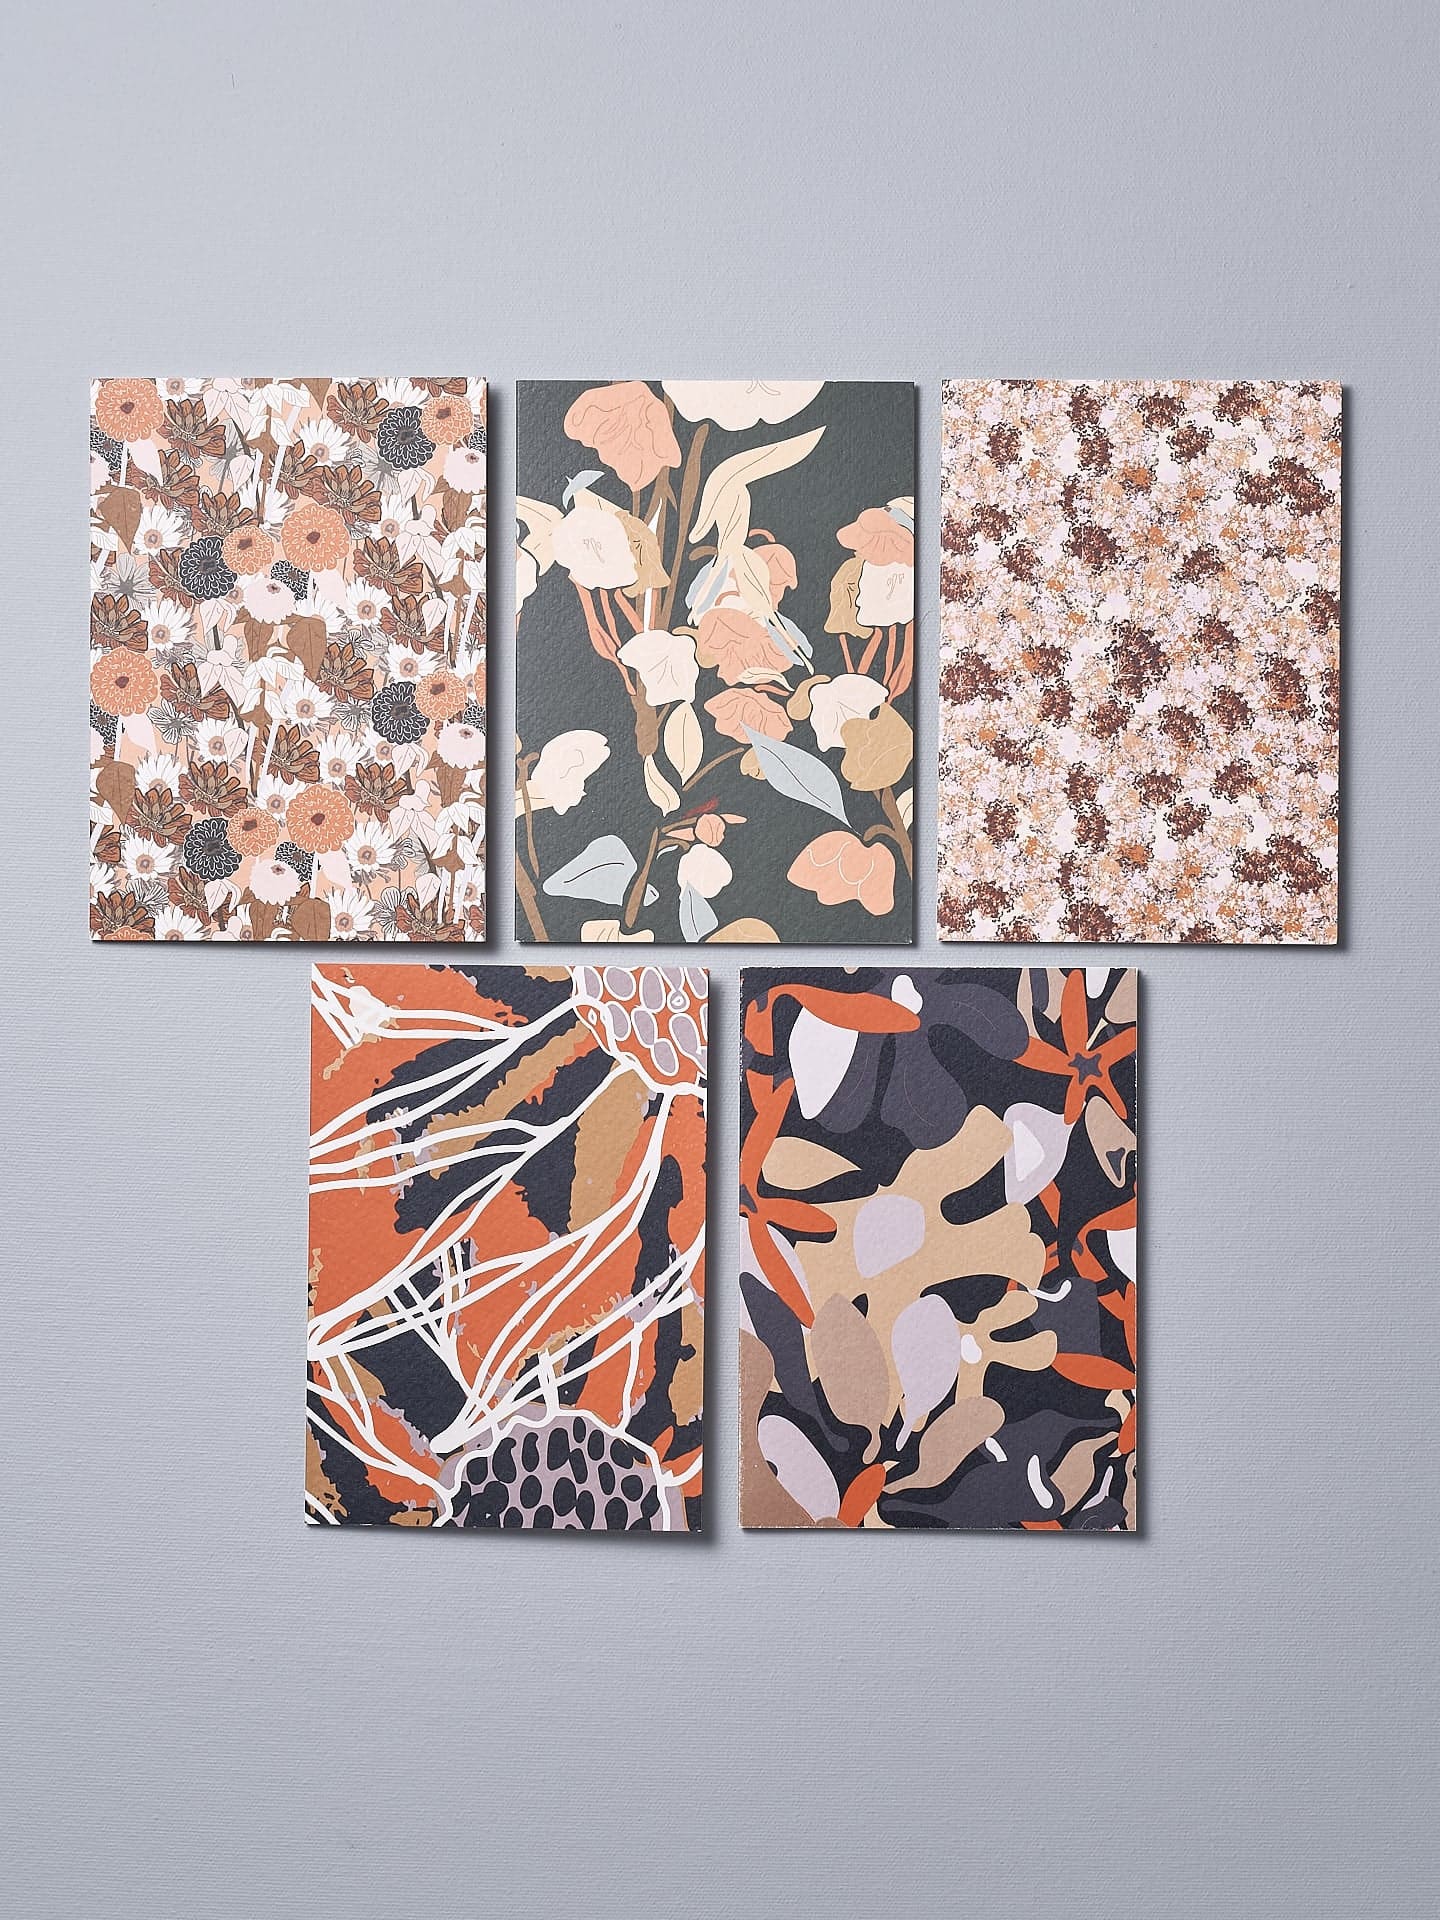 A set of four Greeting Cards – Vintage Floral with orange and black floral designs by Walker & Bing.